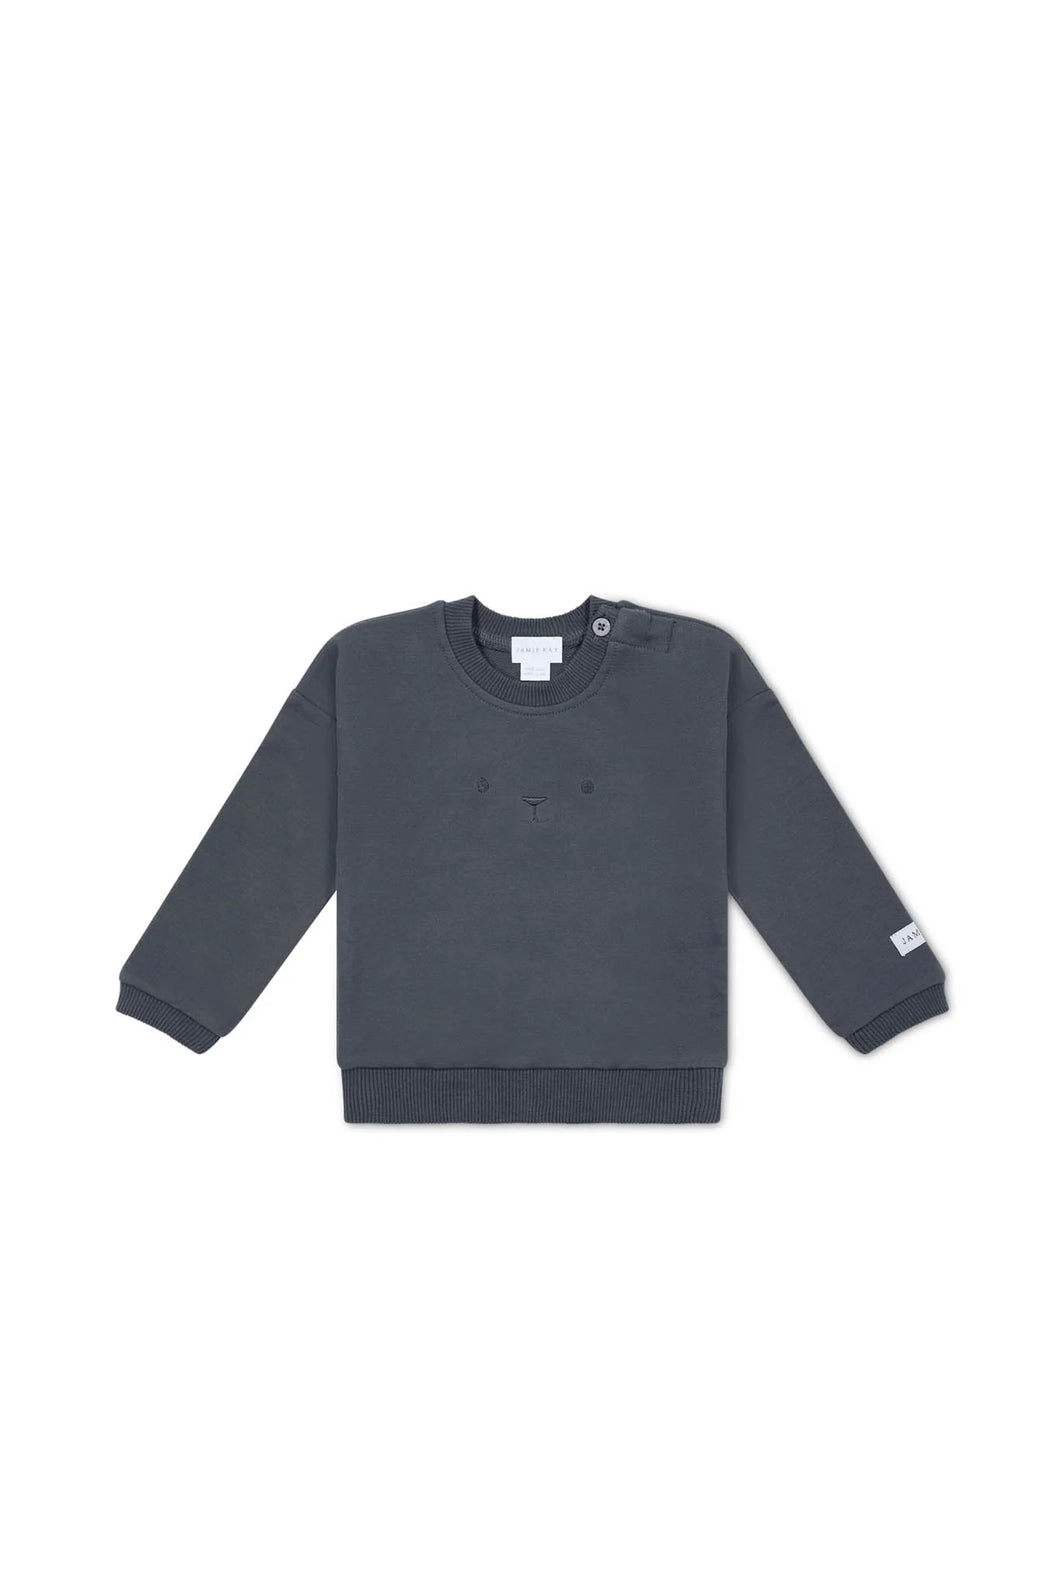 Organic Cotton Damien Sweatshirt - Arctic